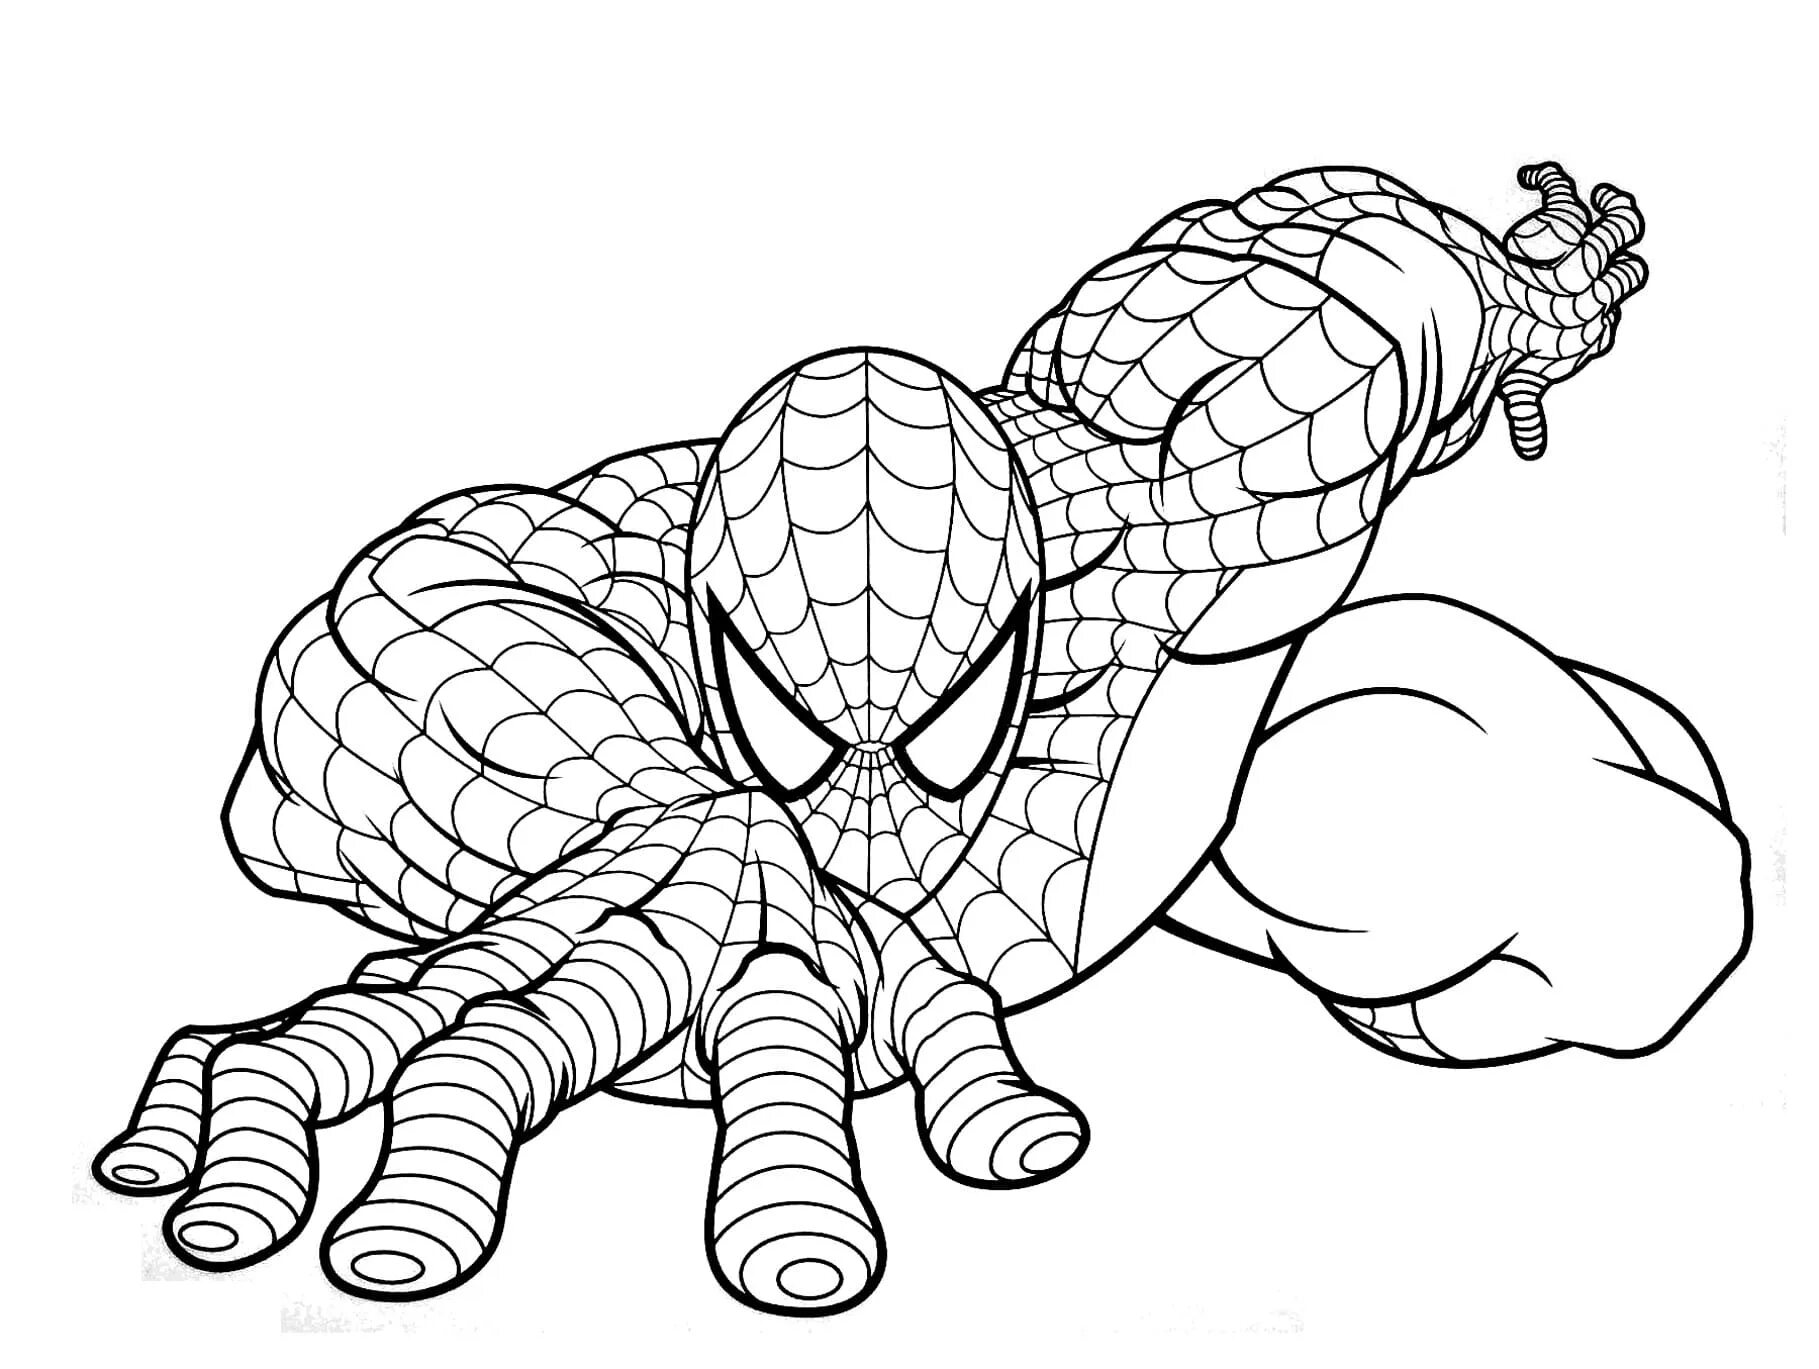 Spider man antistress #2